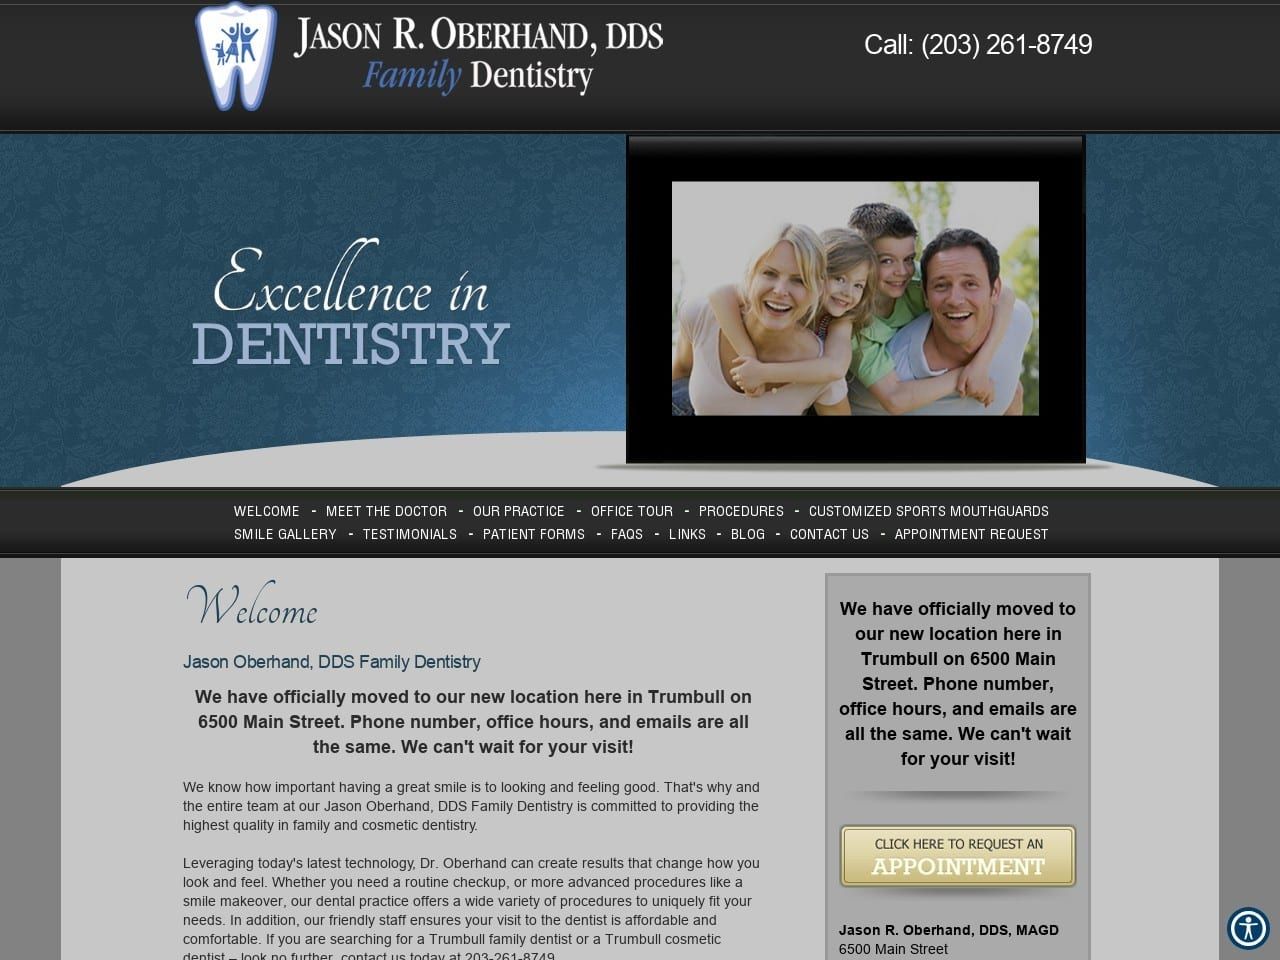 Jason R. Oberhand Family Dentistry Website Screenshot from jasonoberhanddds.com